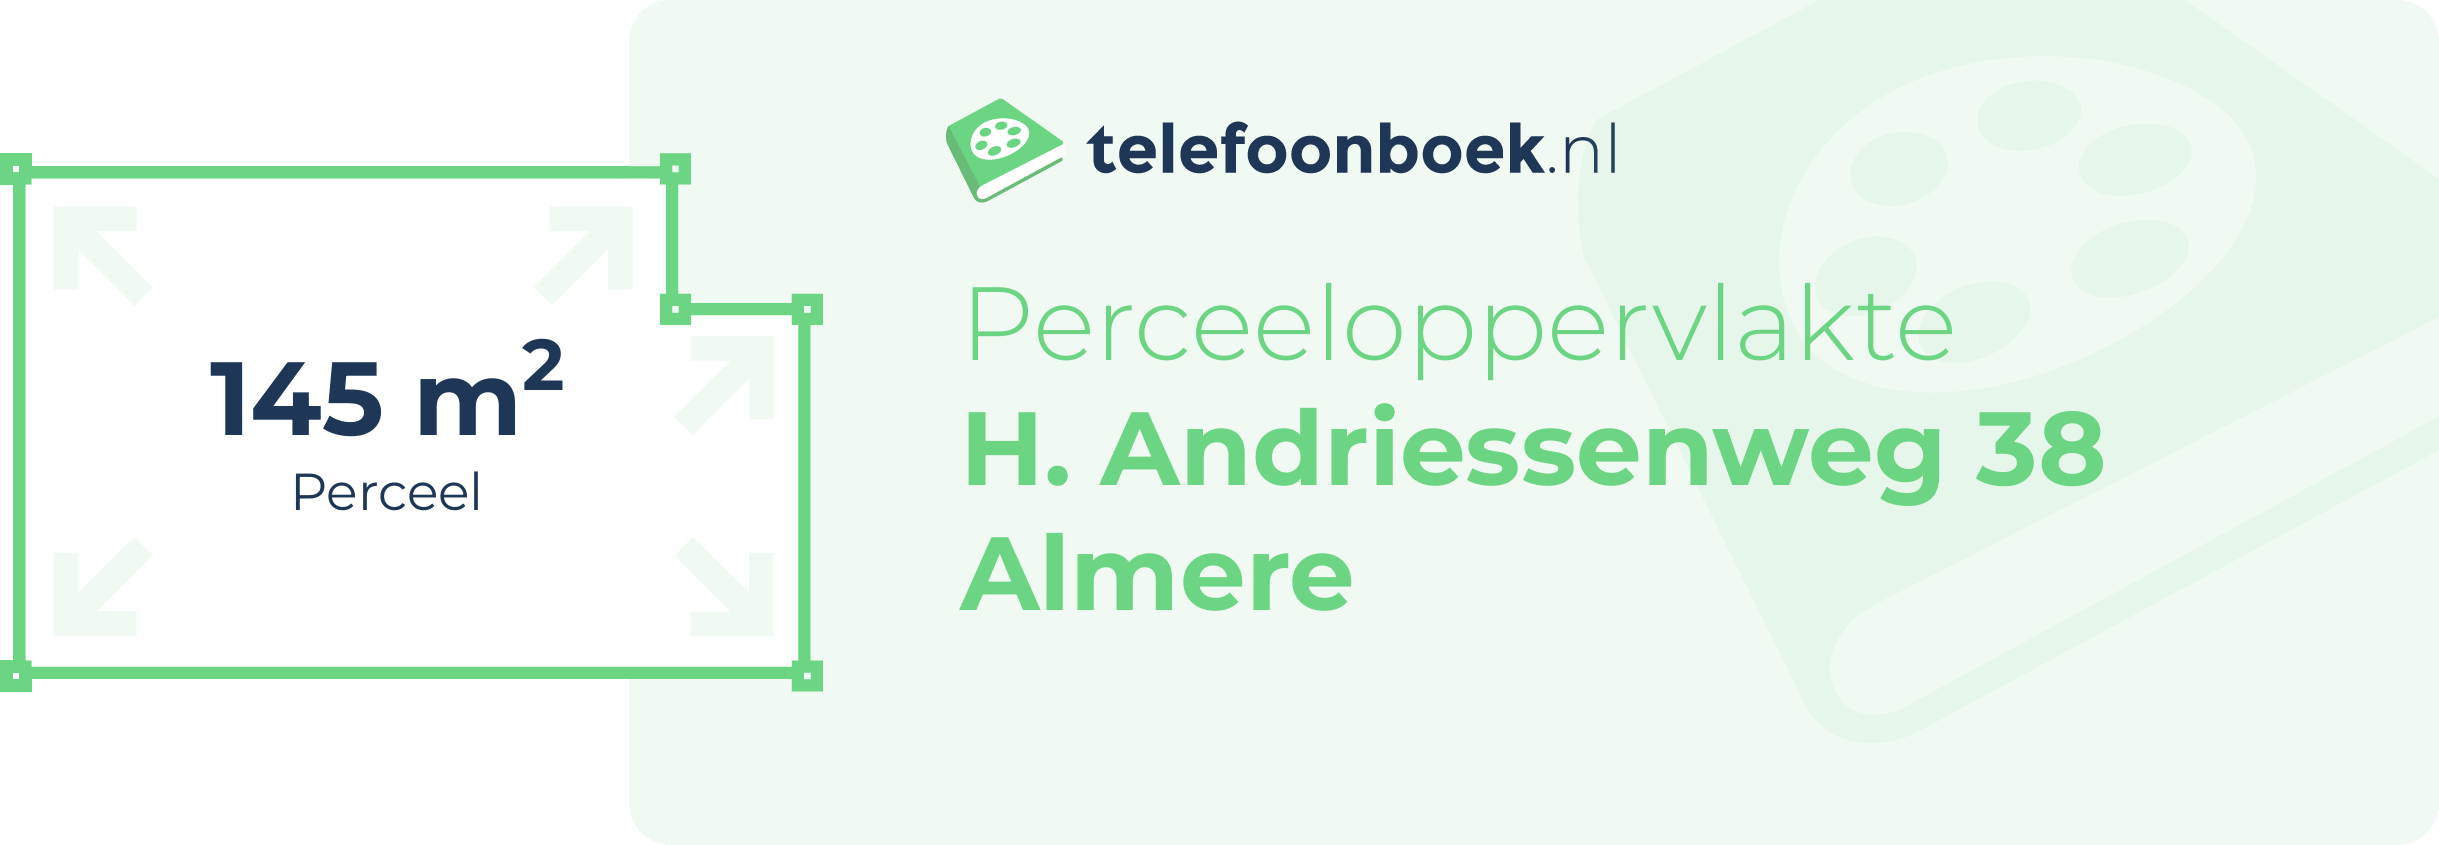 Perceeloppervlakte H. Andriessenweg 38 Almere